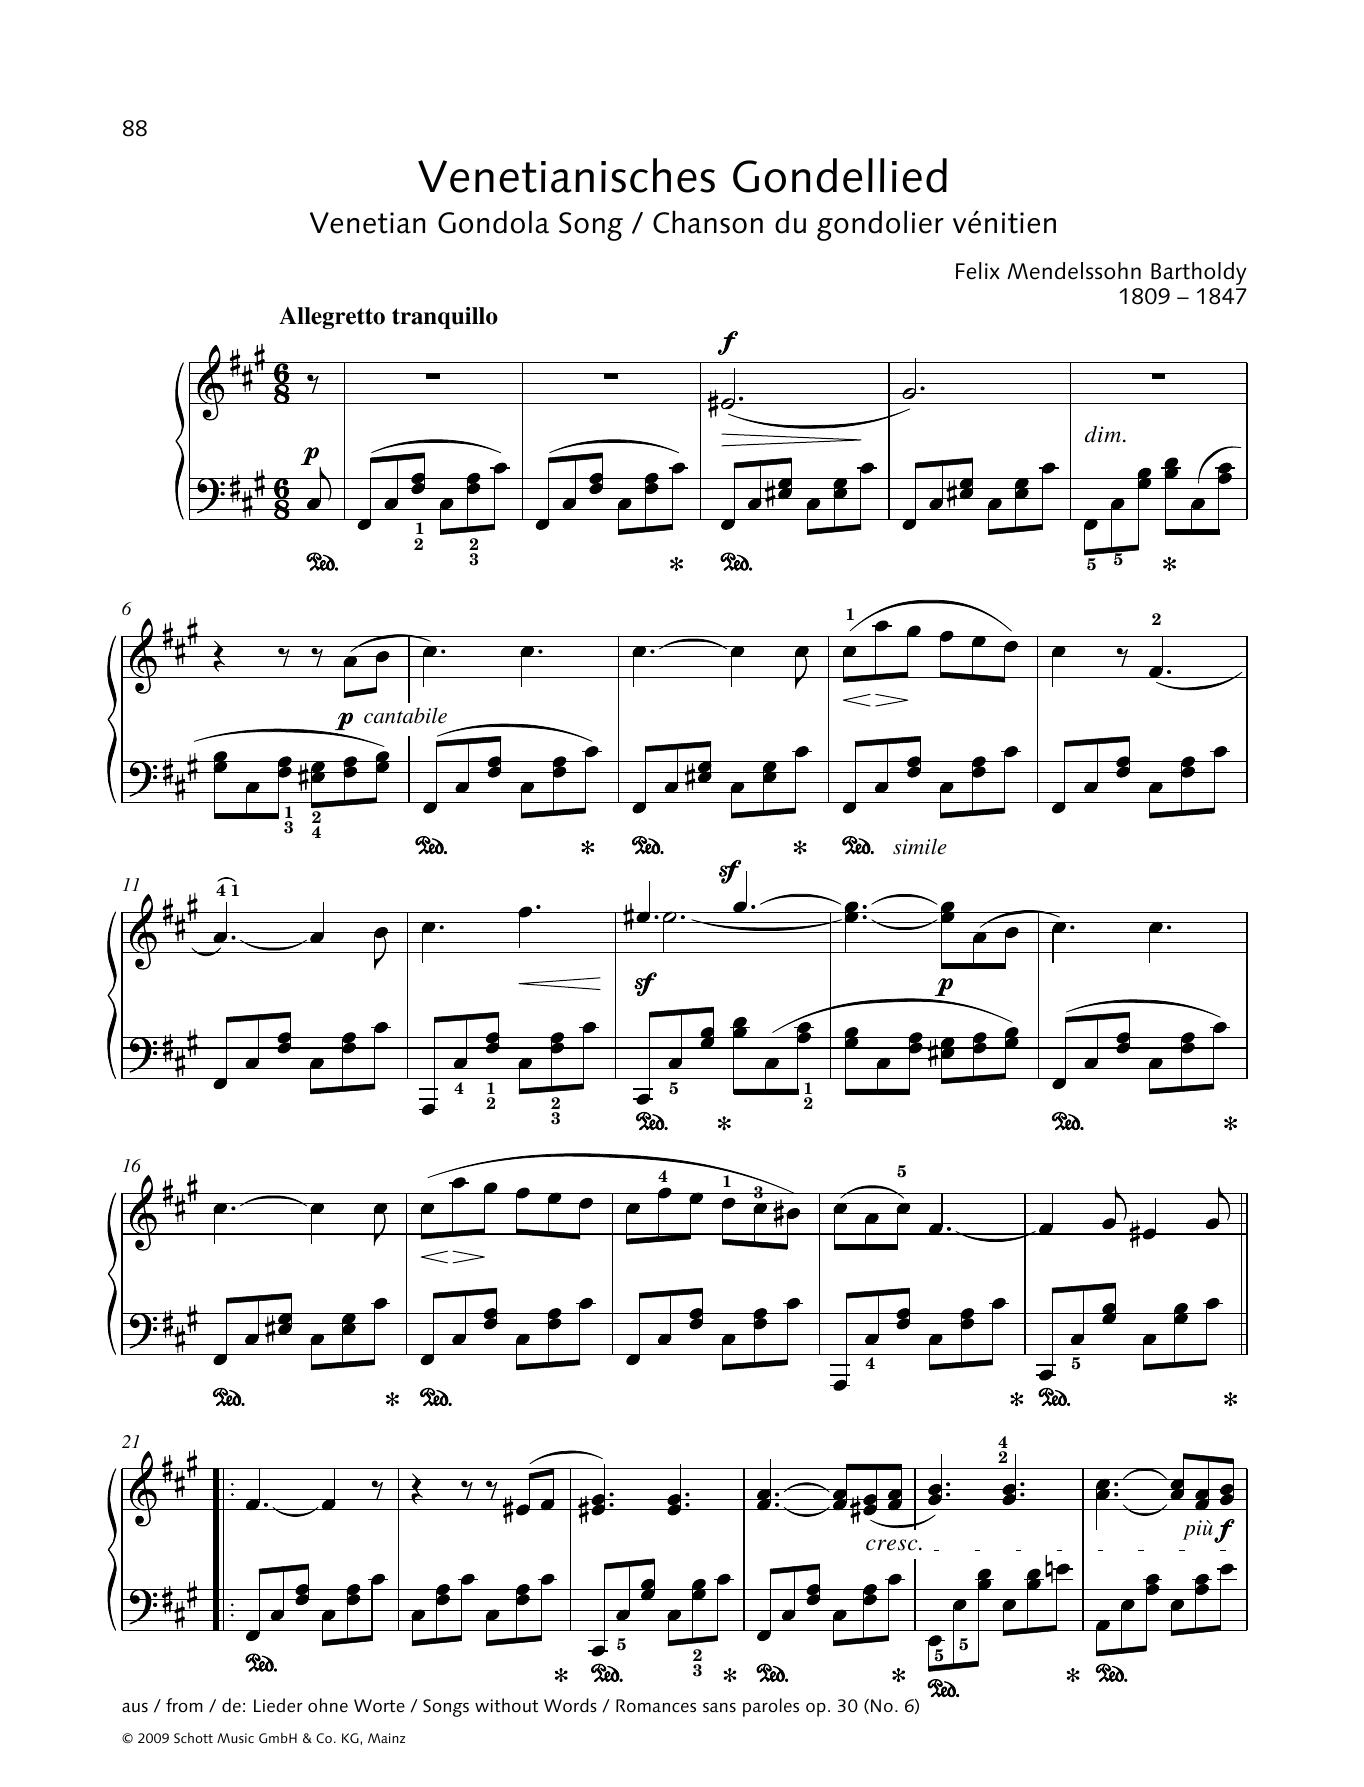 Felix Mendelssohn Bartholdy Venetian Gondola Song Sheet Music Notes & Chords for Piano Solo - Download or Print PDF